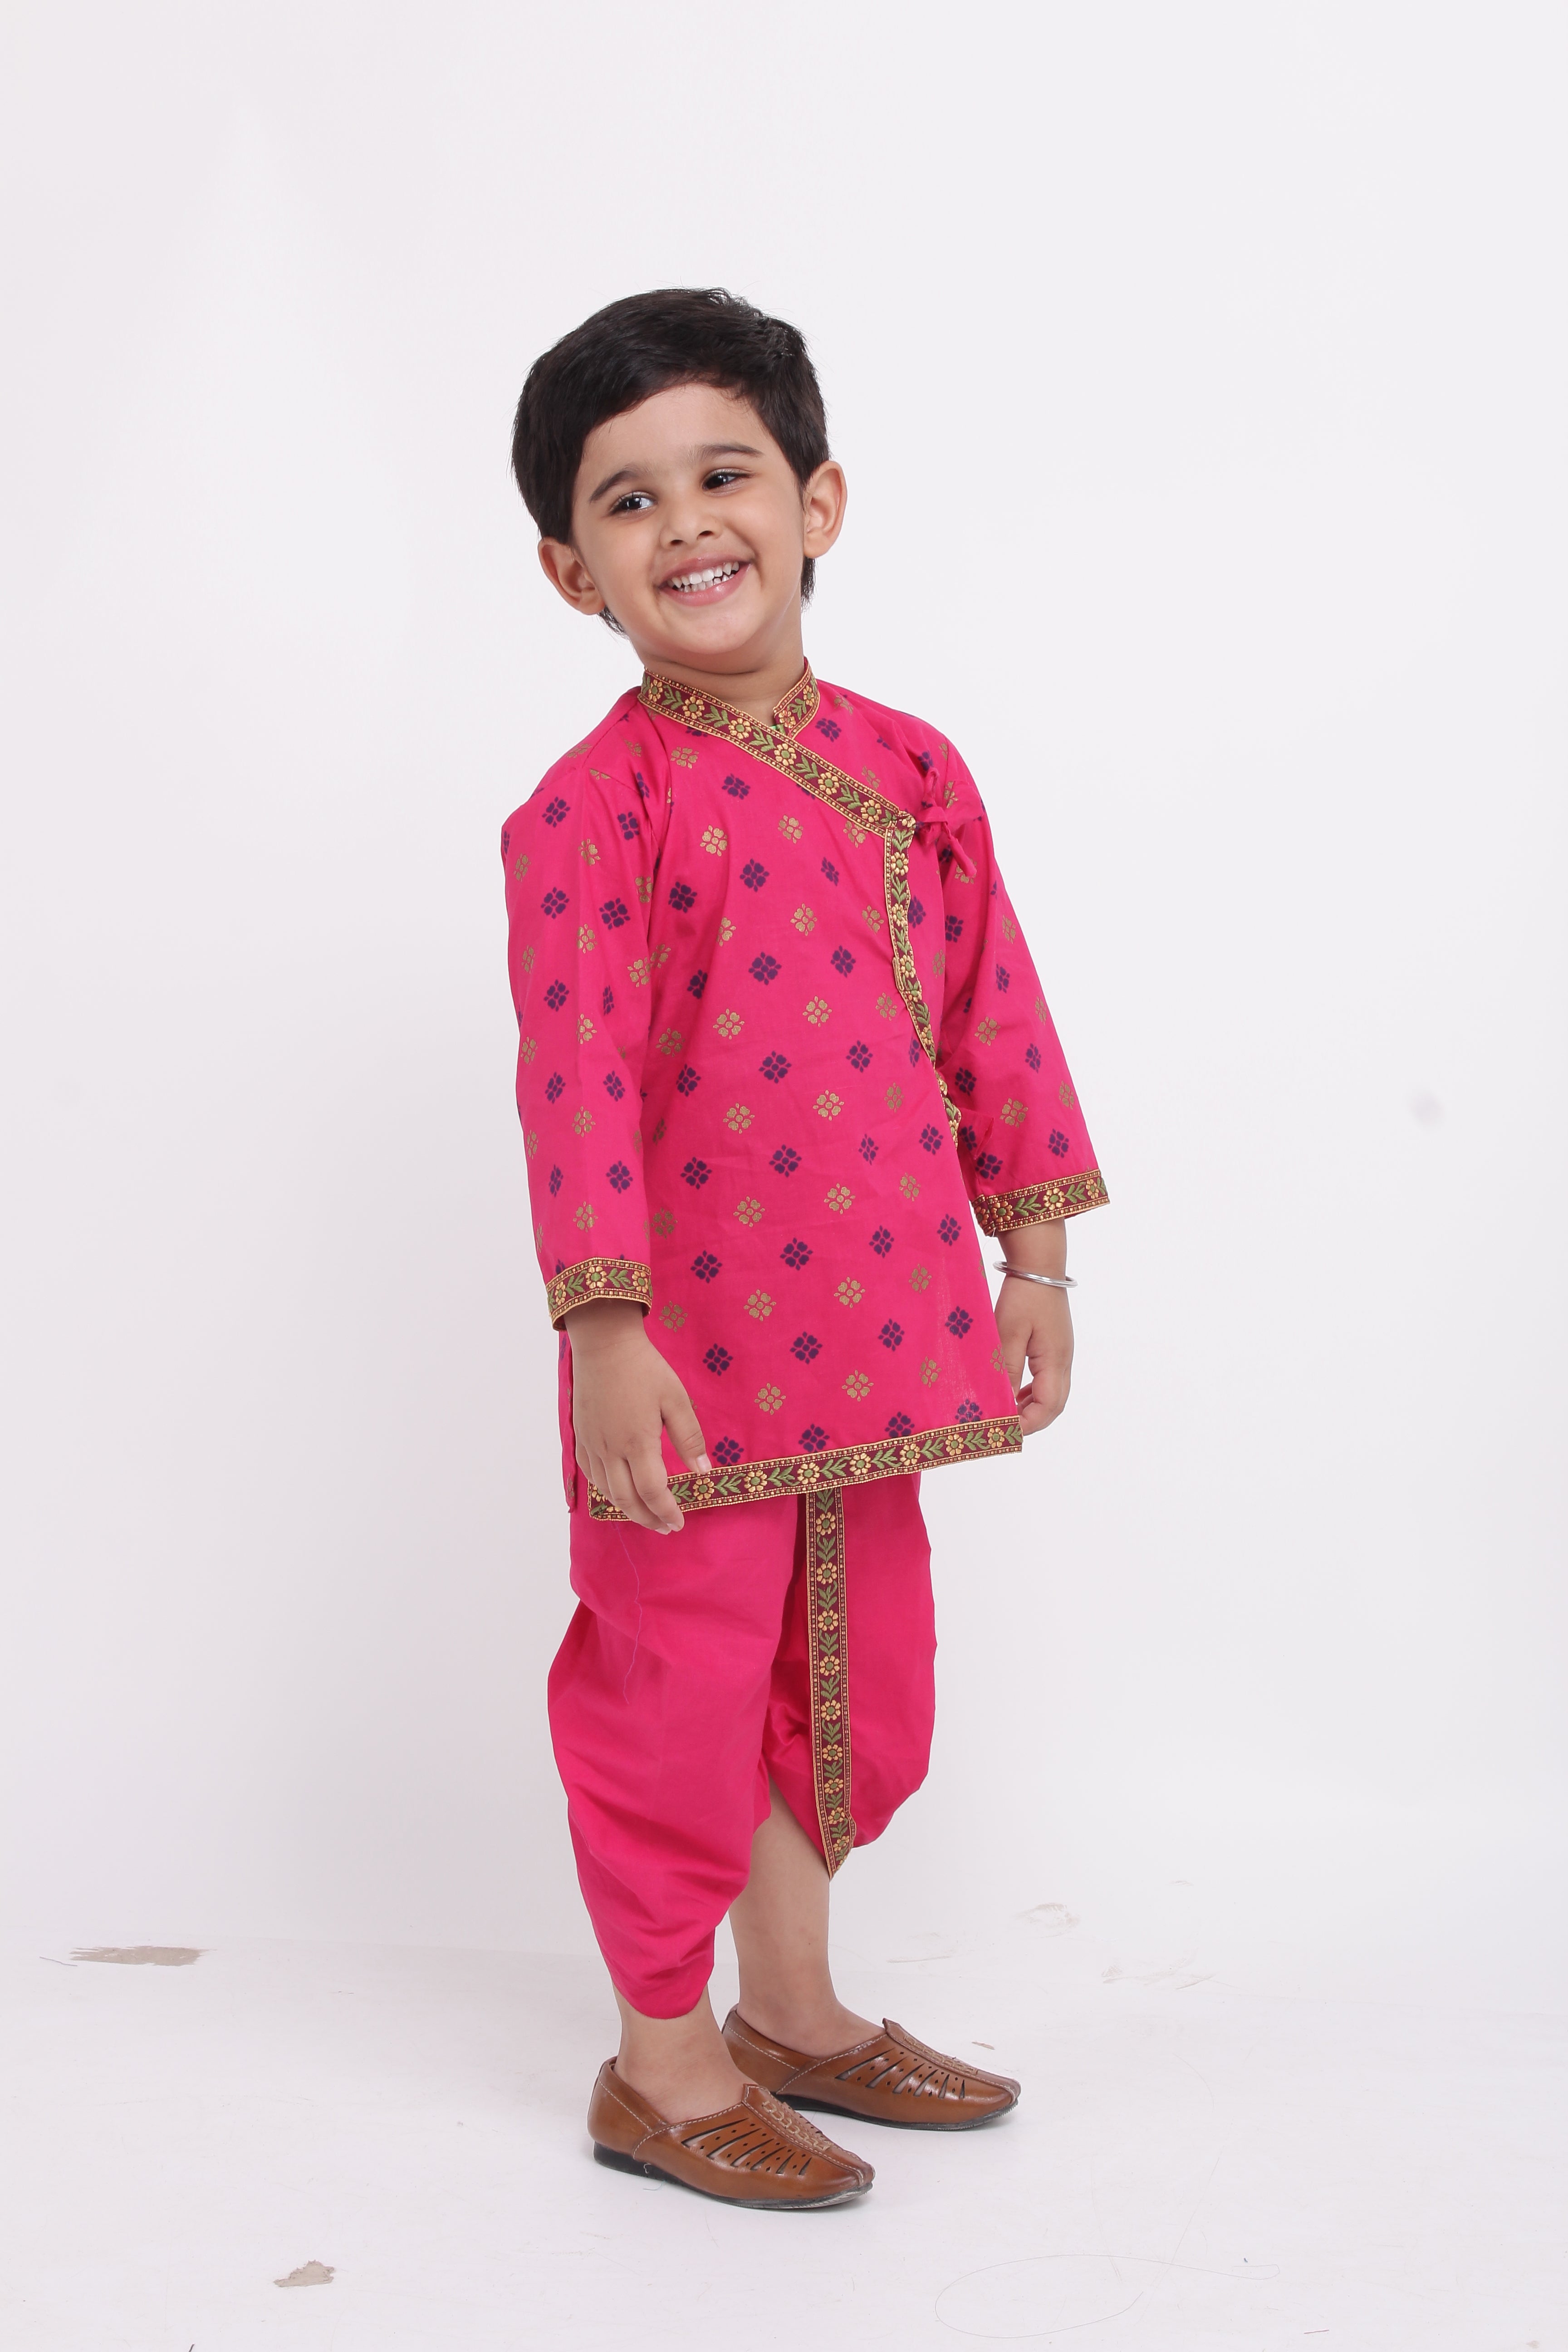 BownBee Cotton Kanhaiya Suit Dress For Baby Boy- Pink